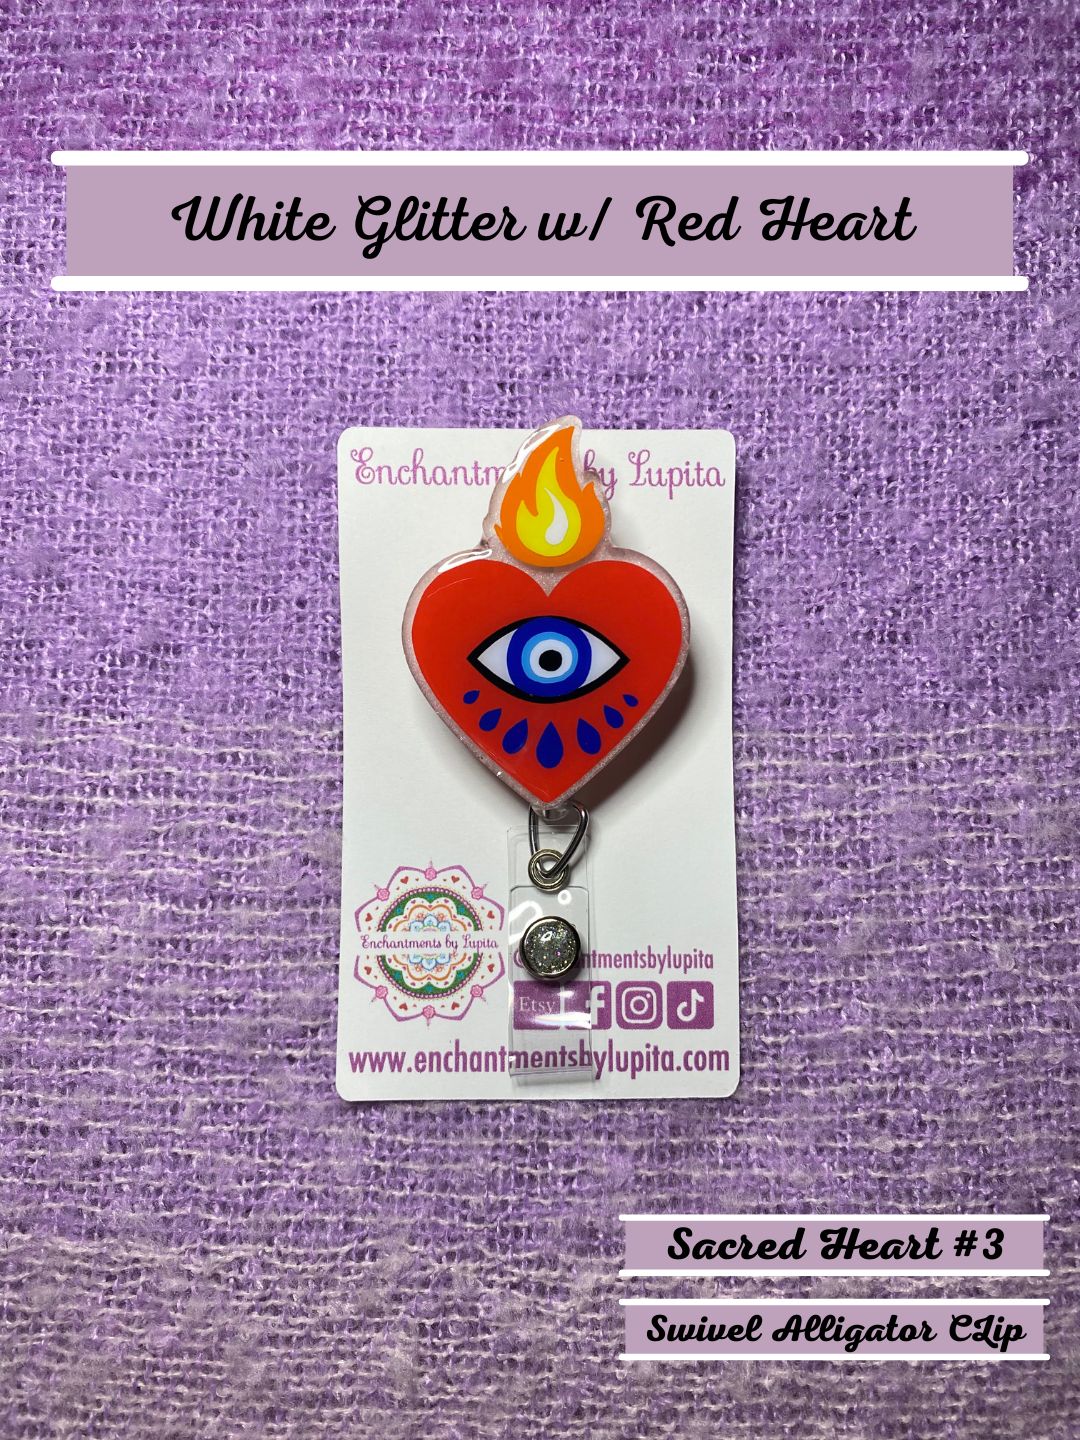 Sacred Heart Nazar Badge Reel - Enchantments by Lupita